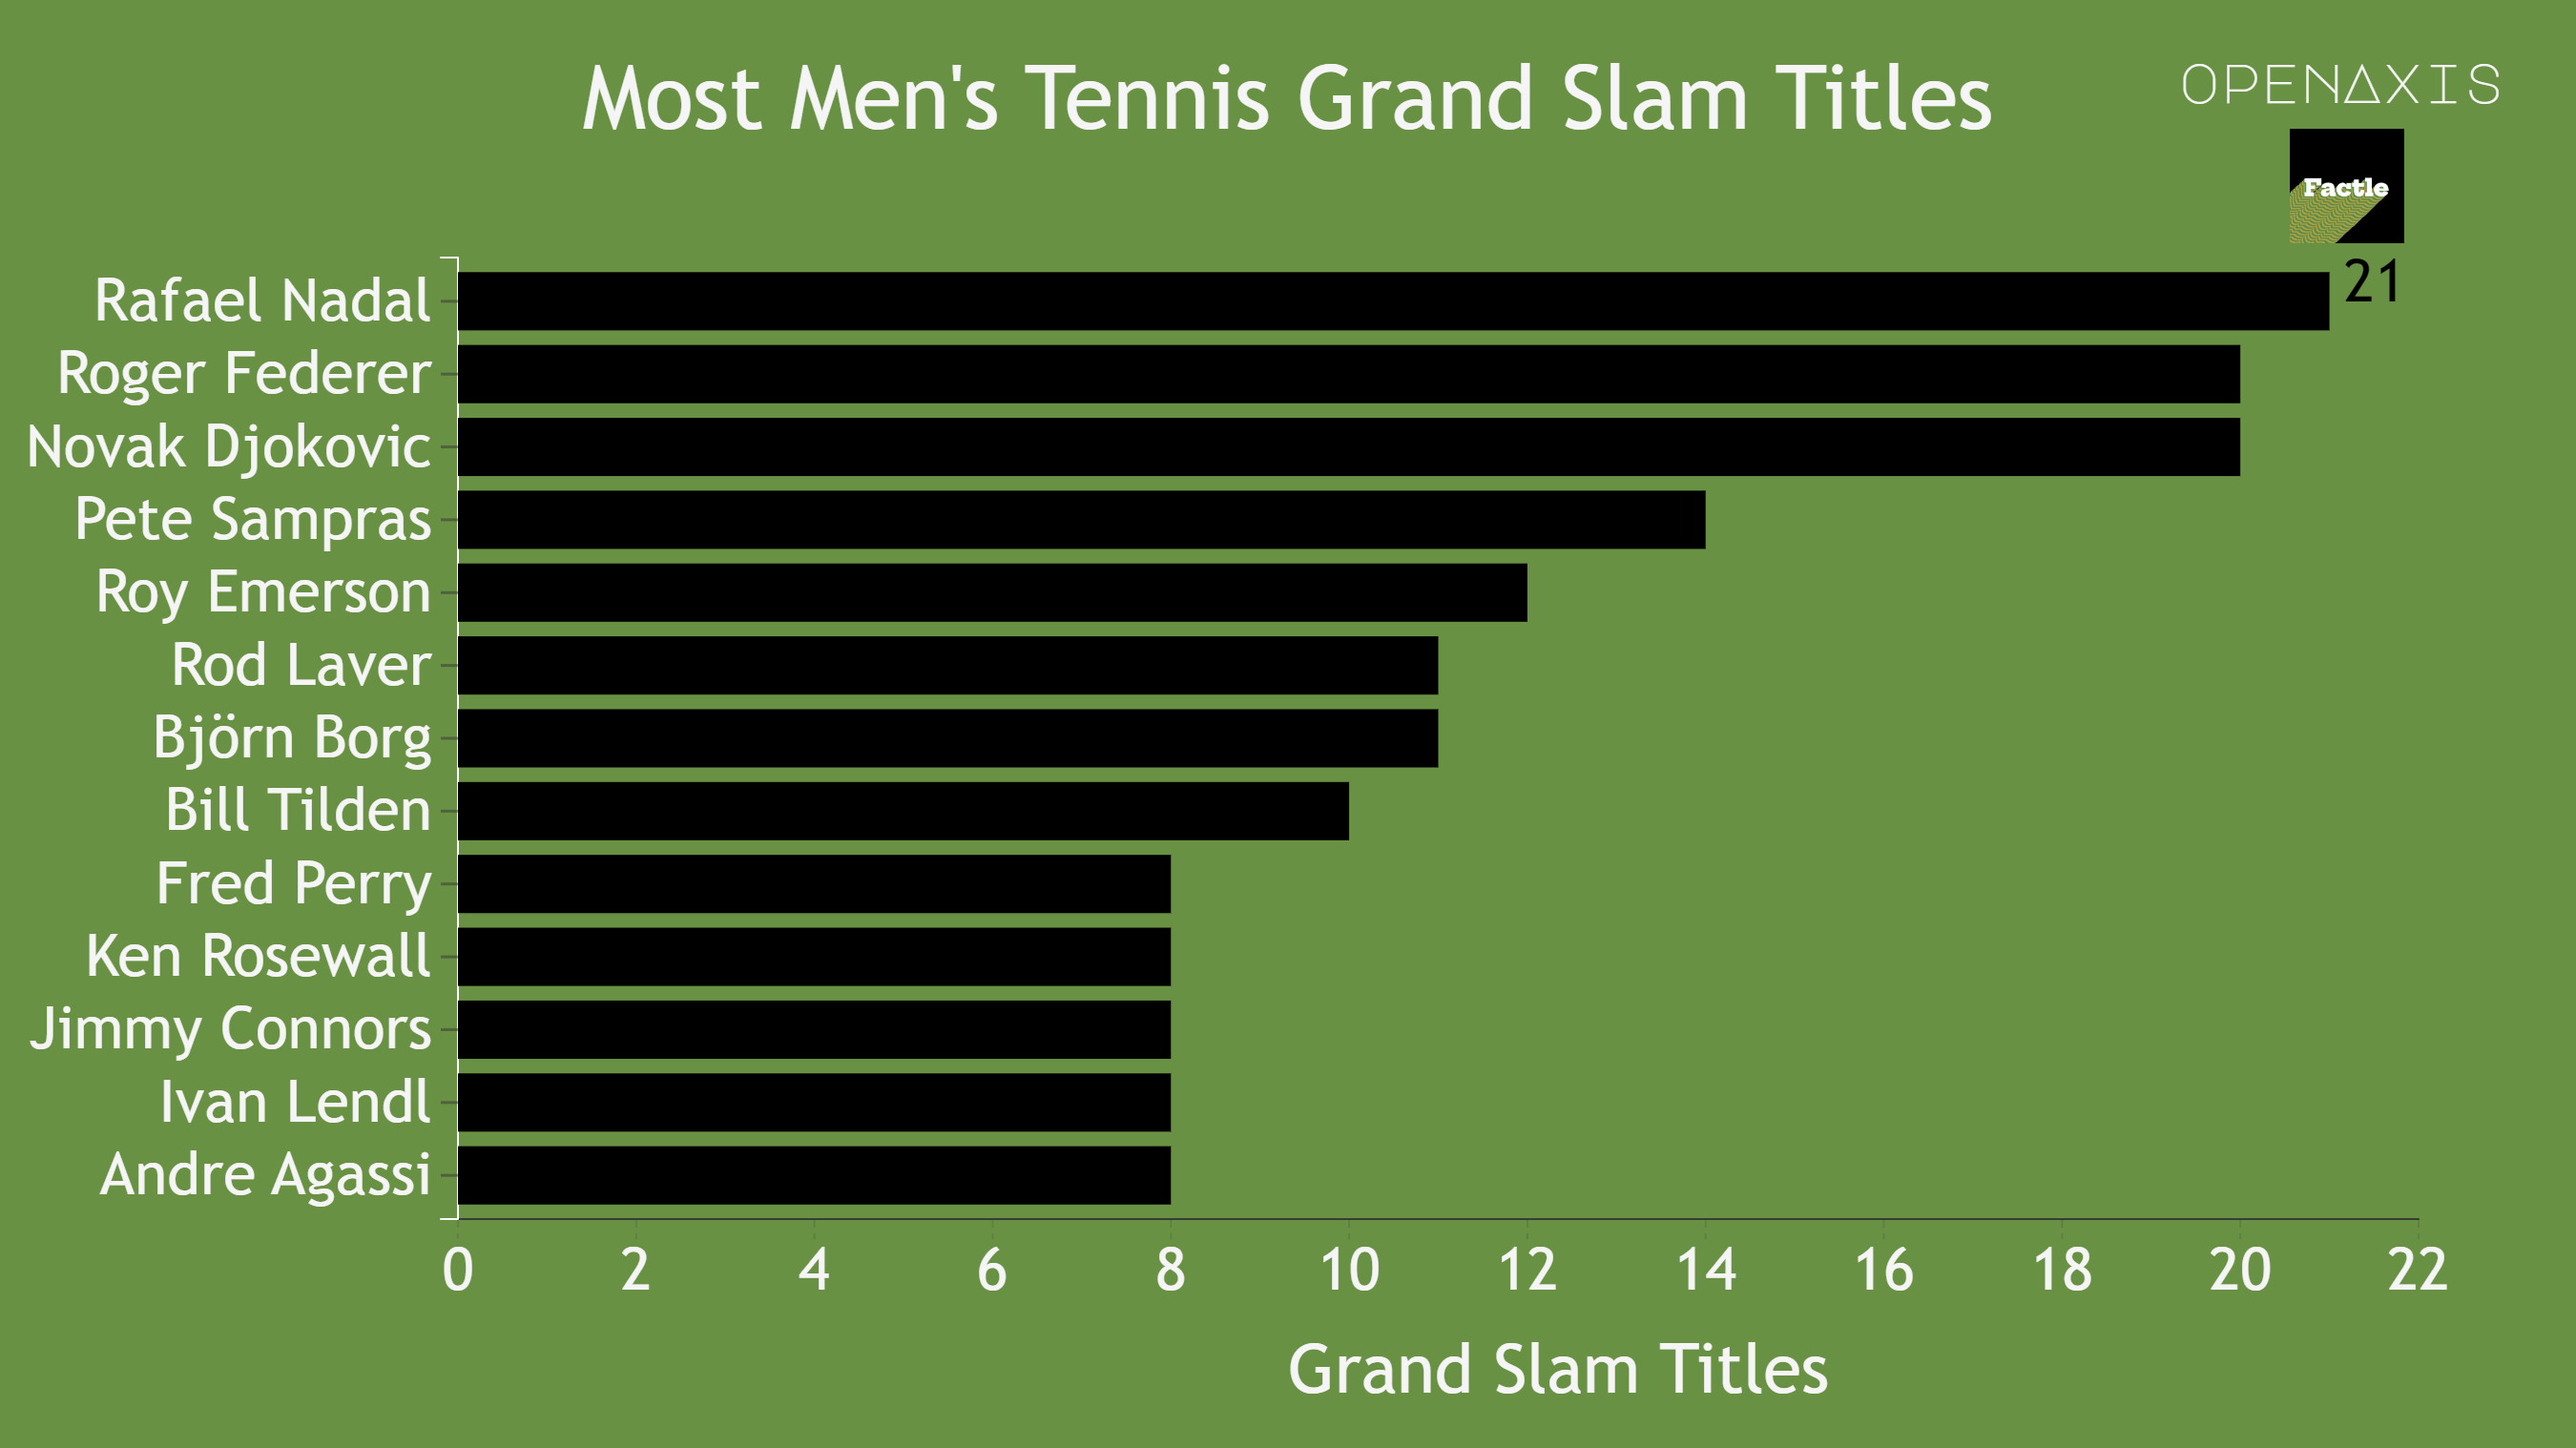 "Most Men's Tennis Grand Slam Titles"